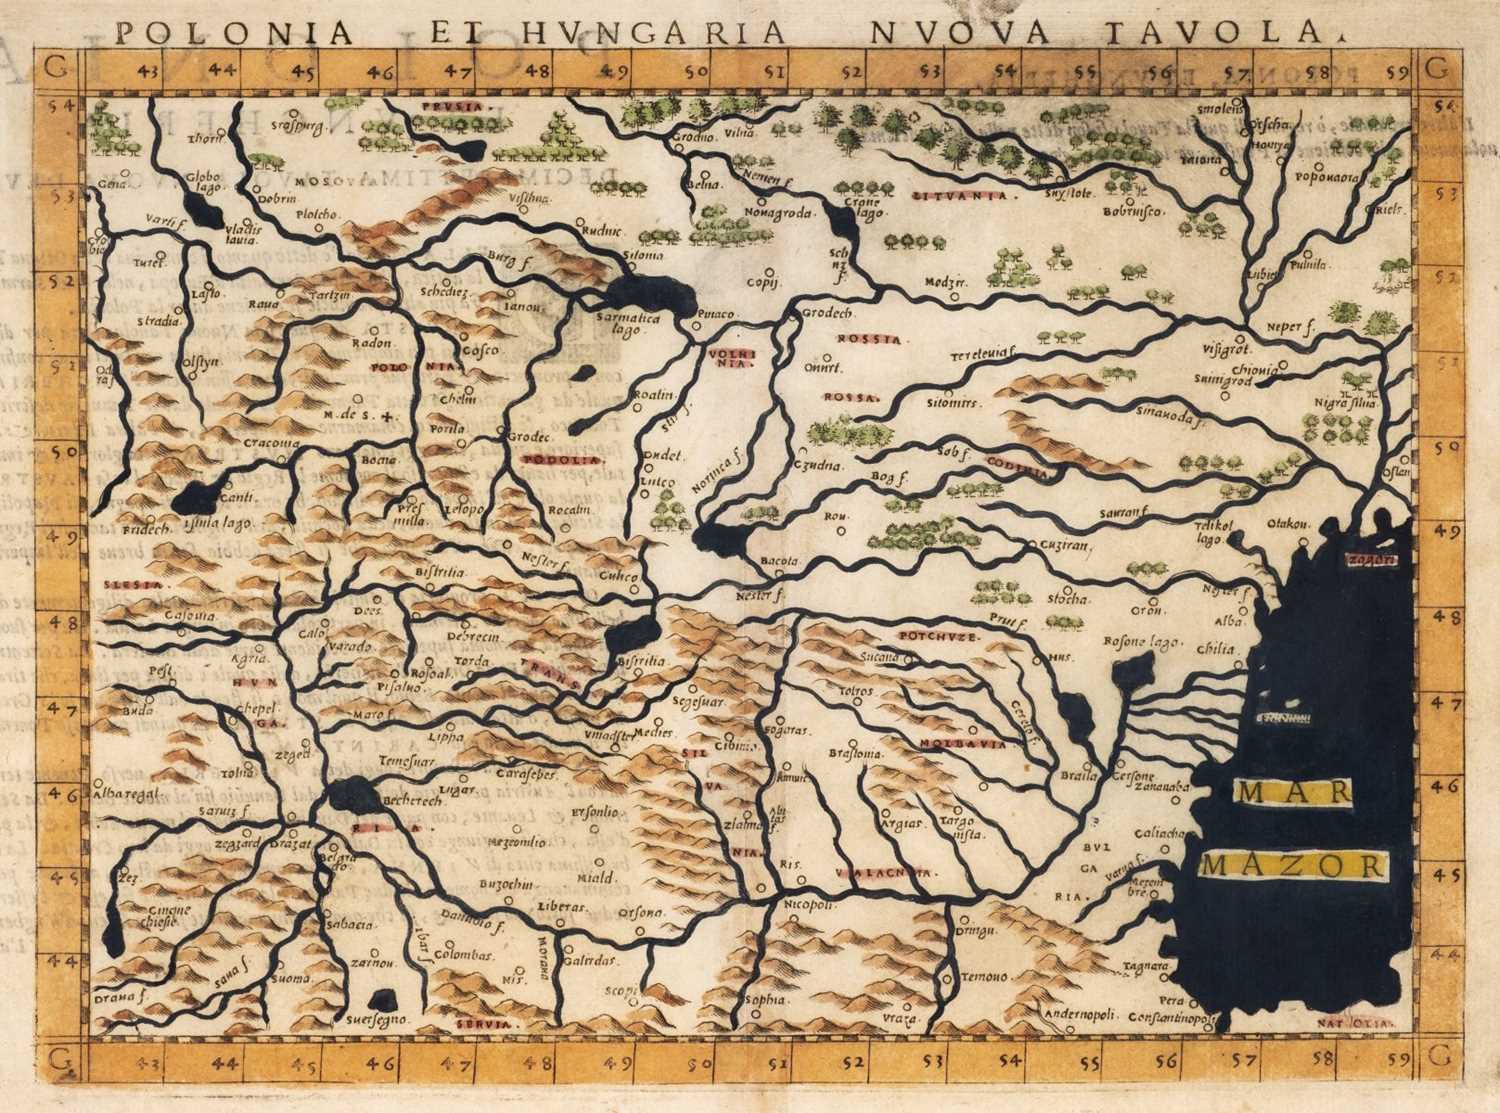 Lot 95 - Poland. Meletius (Josephus, publisher), Polonia et Hungaria nuova tavola, Venice, circa 1562